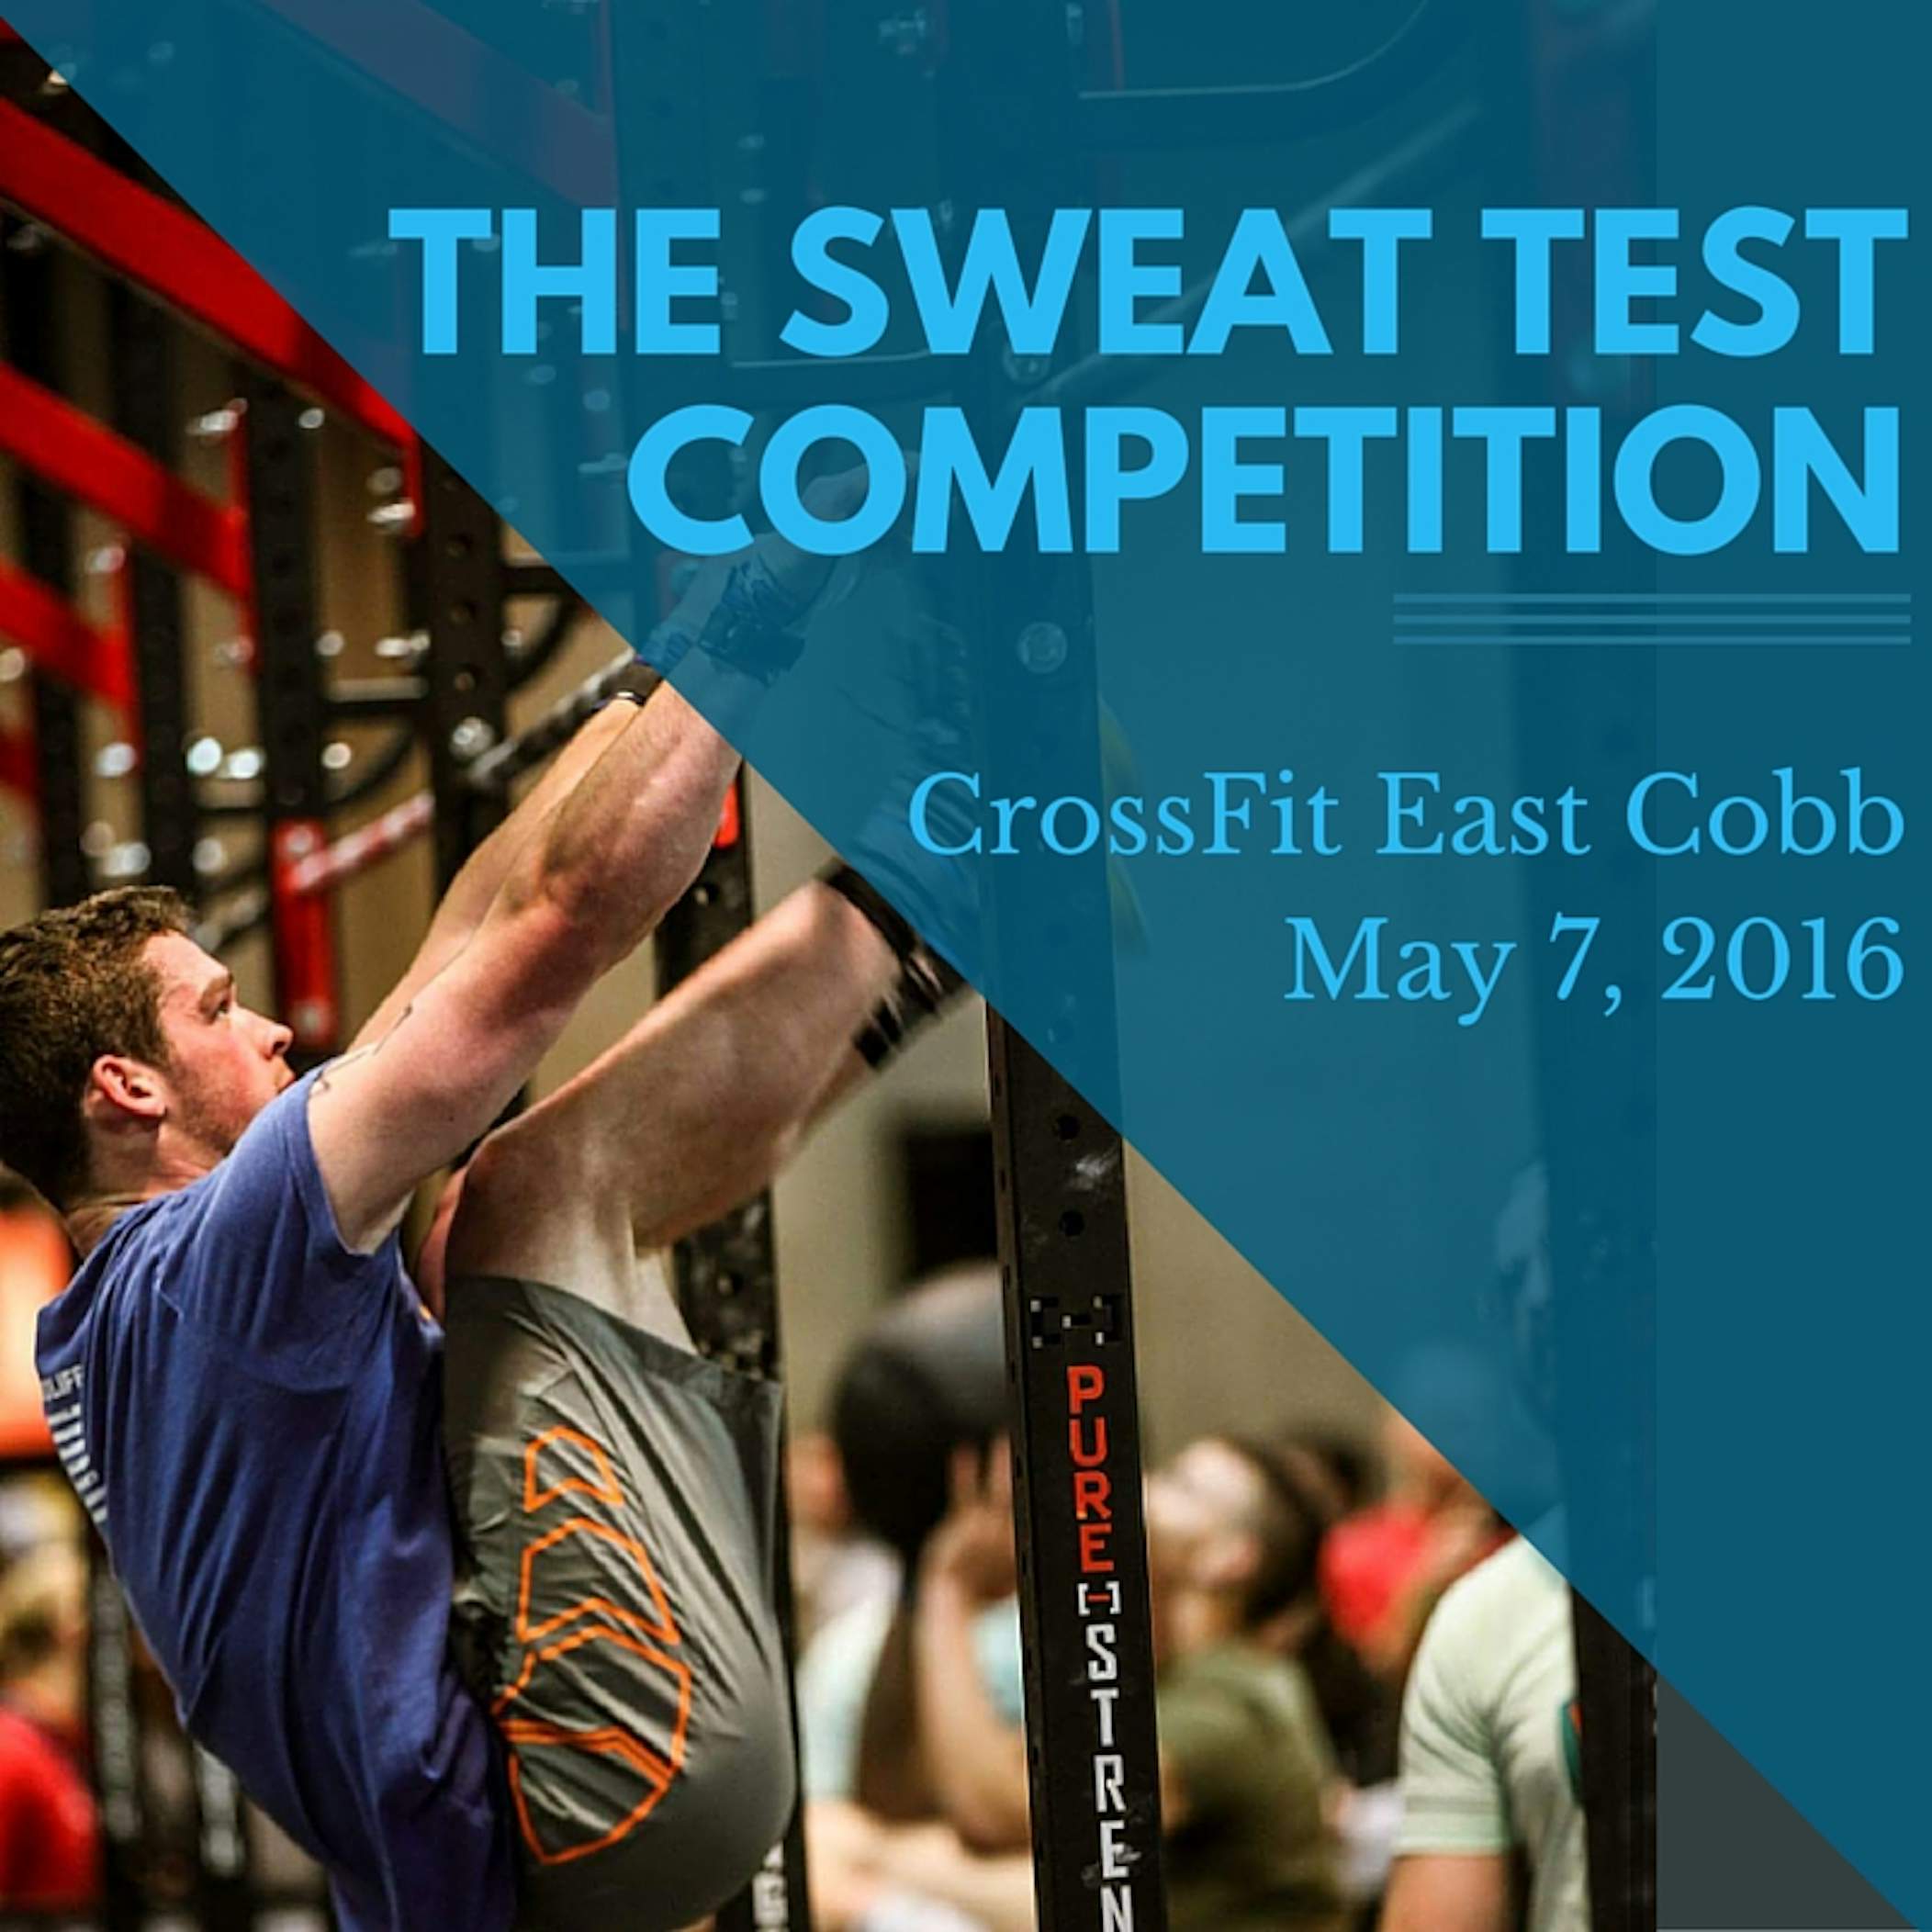 East Cobb Cross Fit Training Classes & More - Visit Compound Fitness